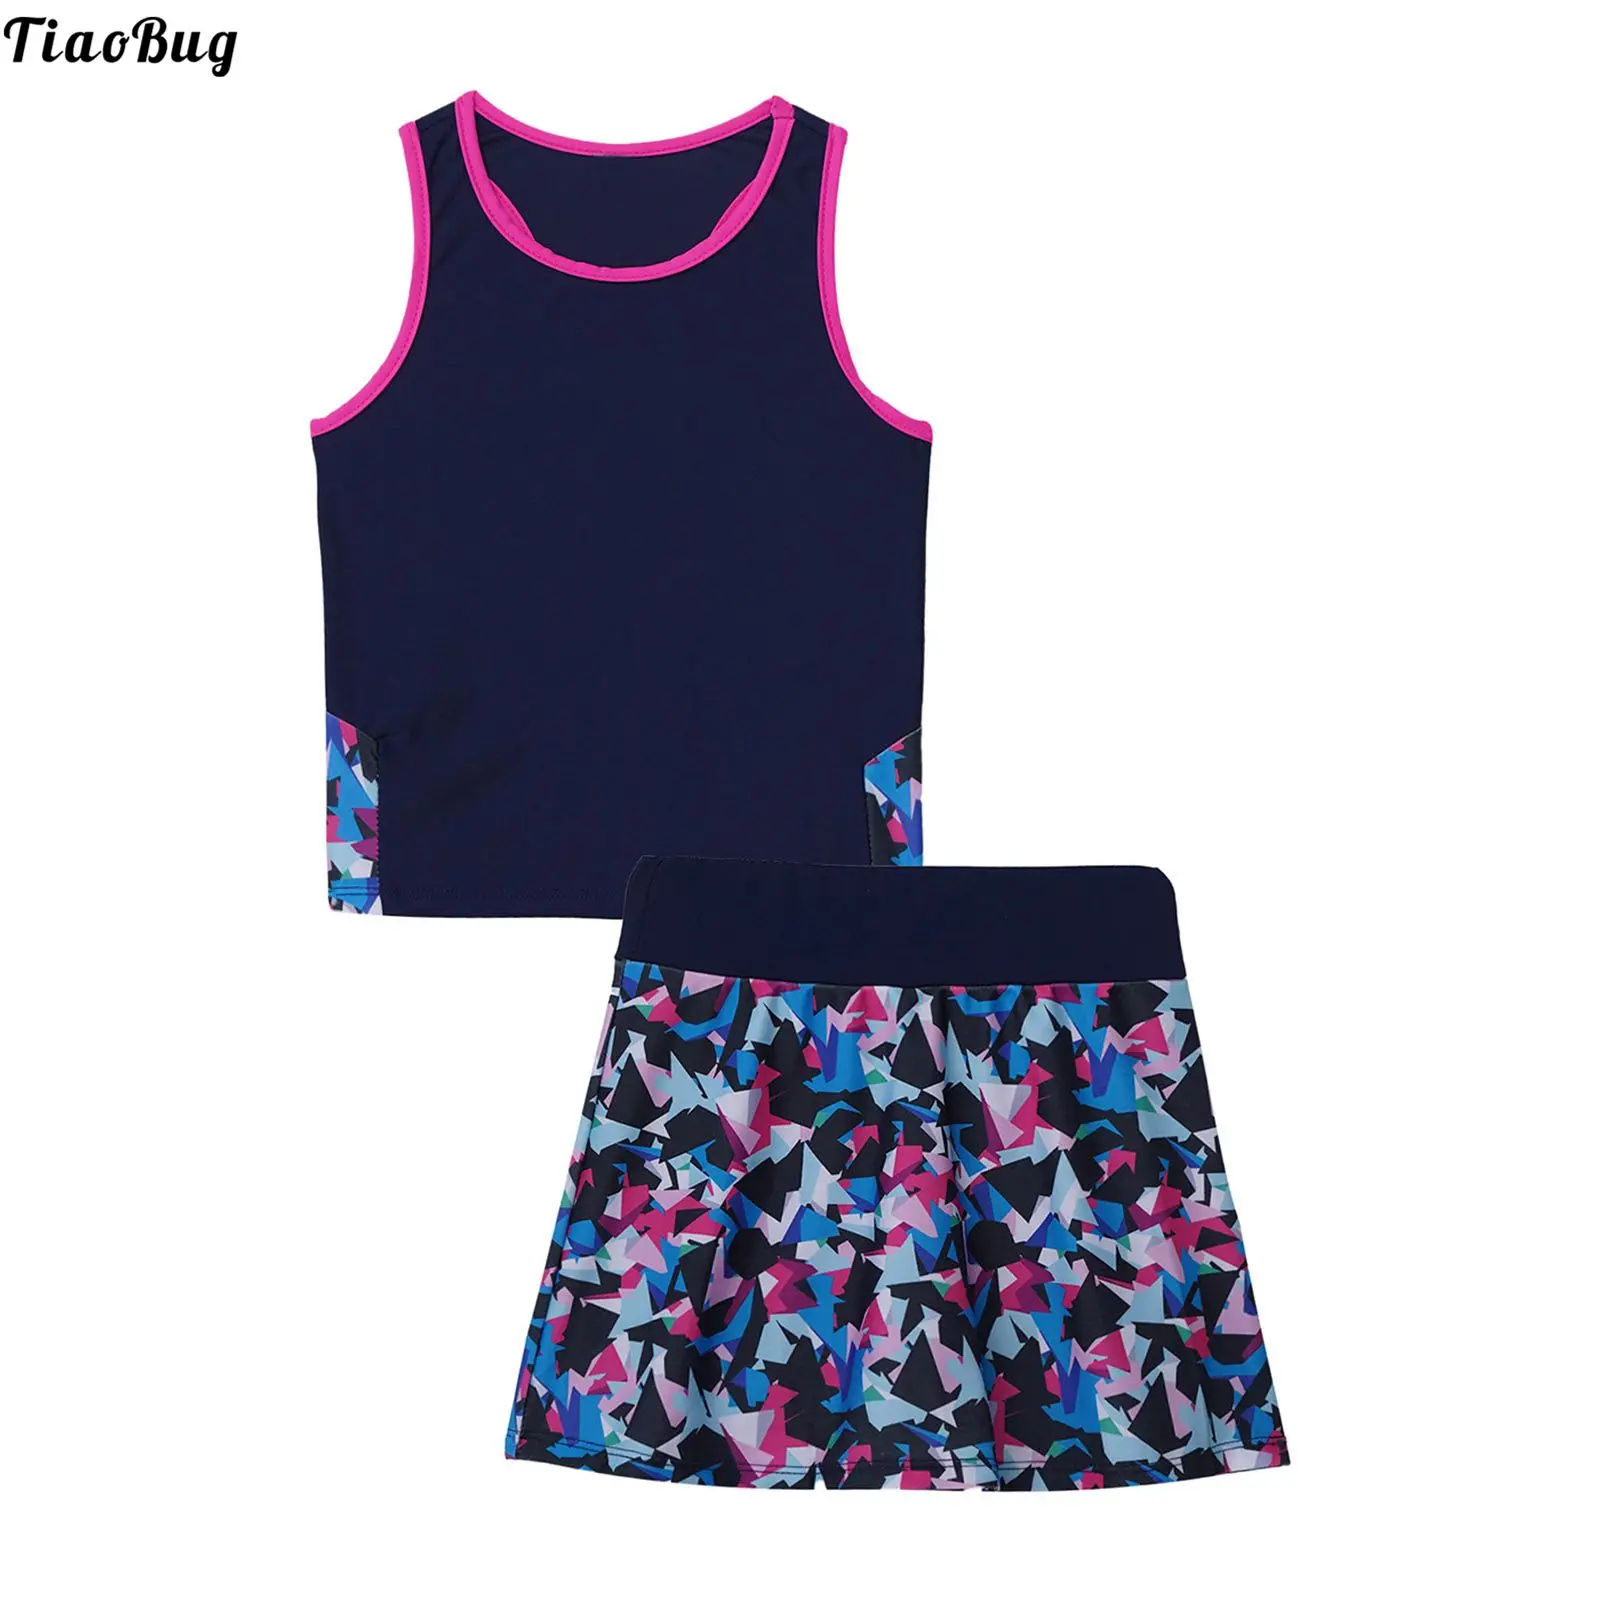 

TiaoBug 2Pcs Kids Girls Tennis Suit Round Neck Sleeveless Racer Back T-Shirt Top And Elastic Waist Skirt With Built-In Short Set